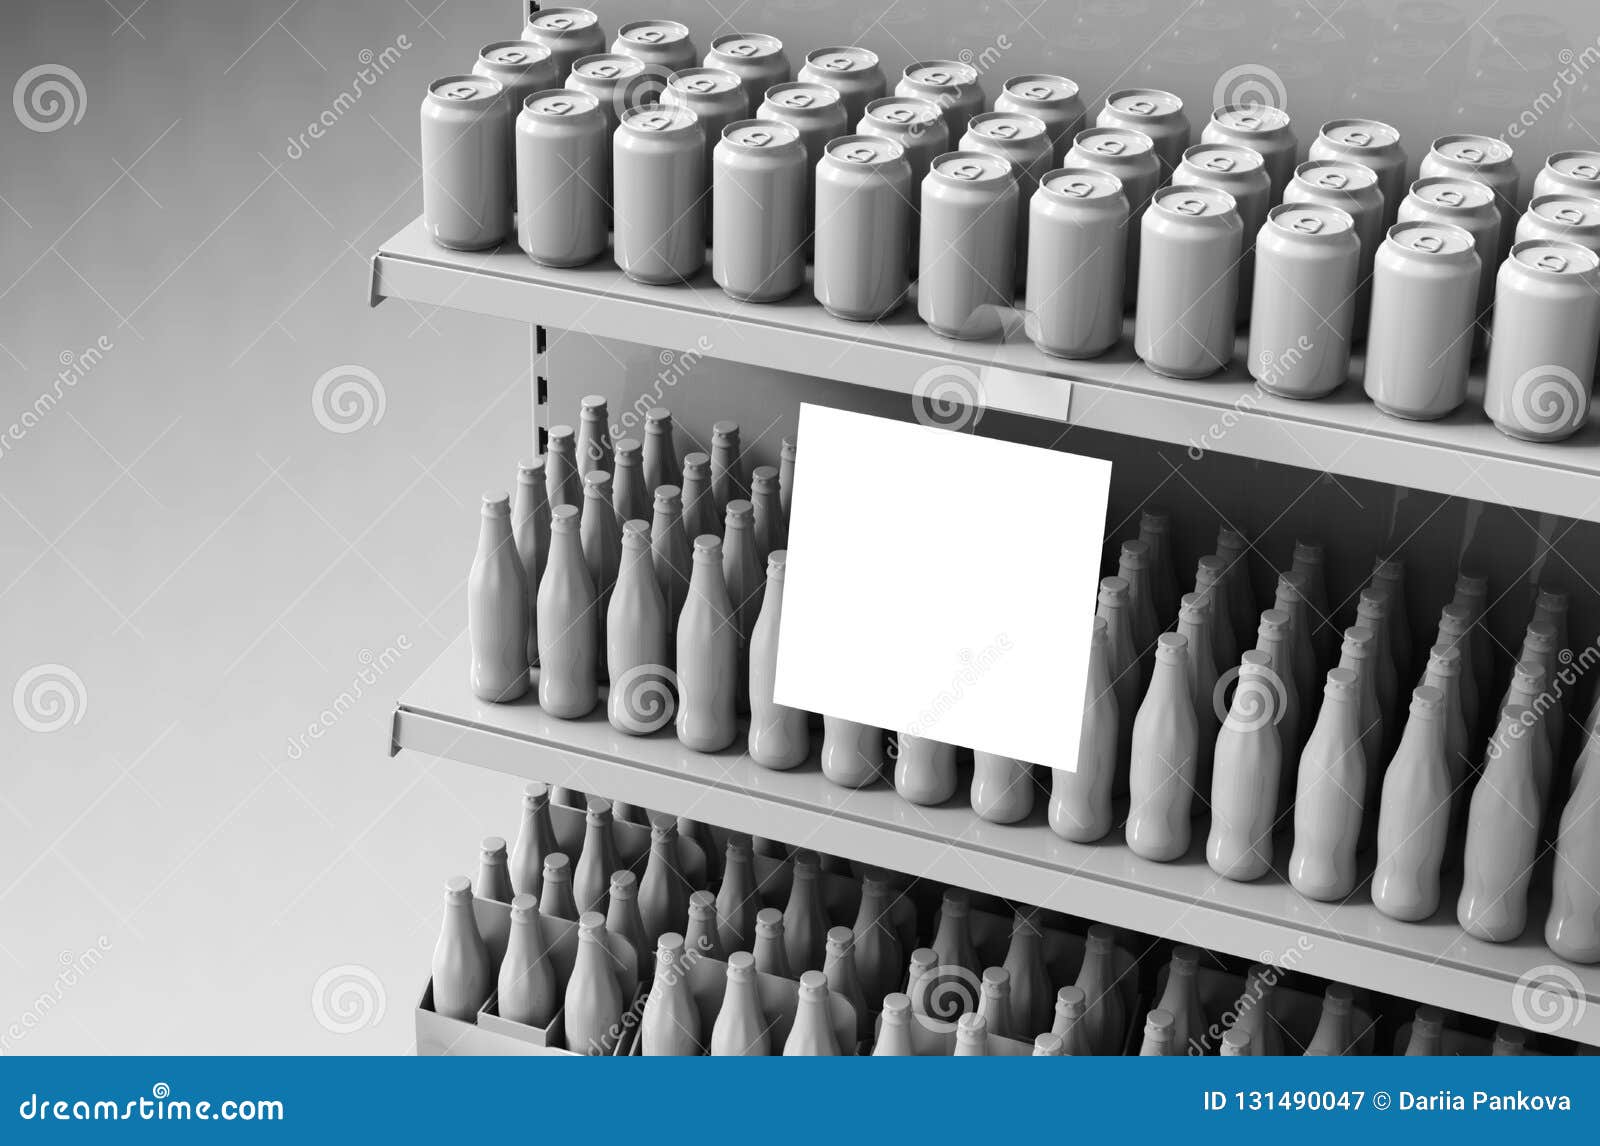 Blank Products On Supermarket Shelves With Square Wobbler. Mockup. Stock Illustration ...